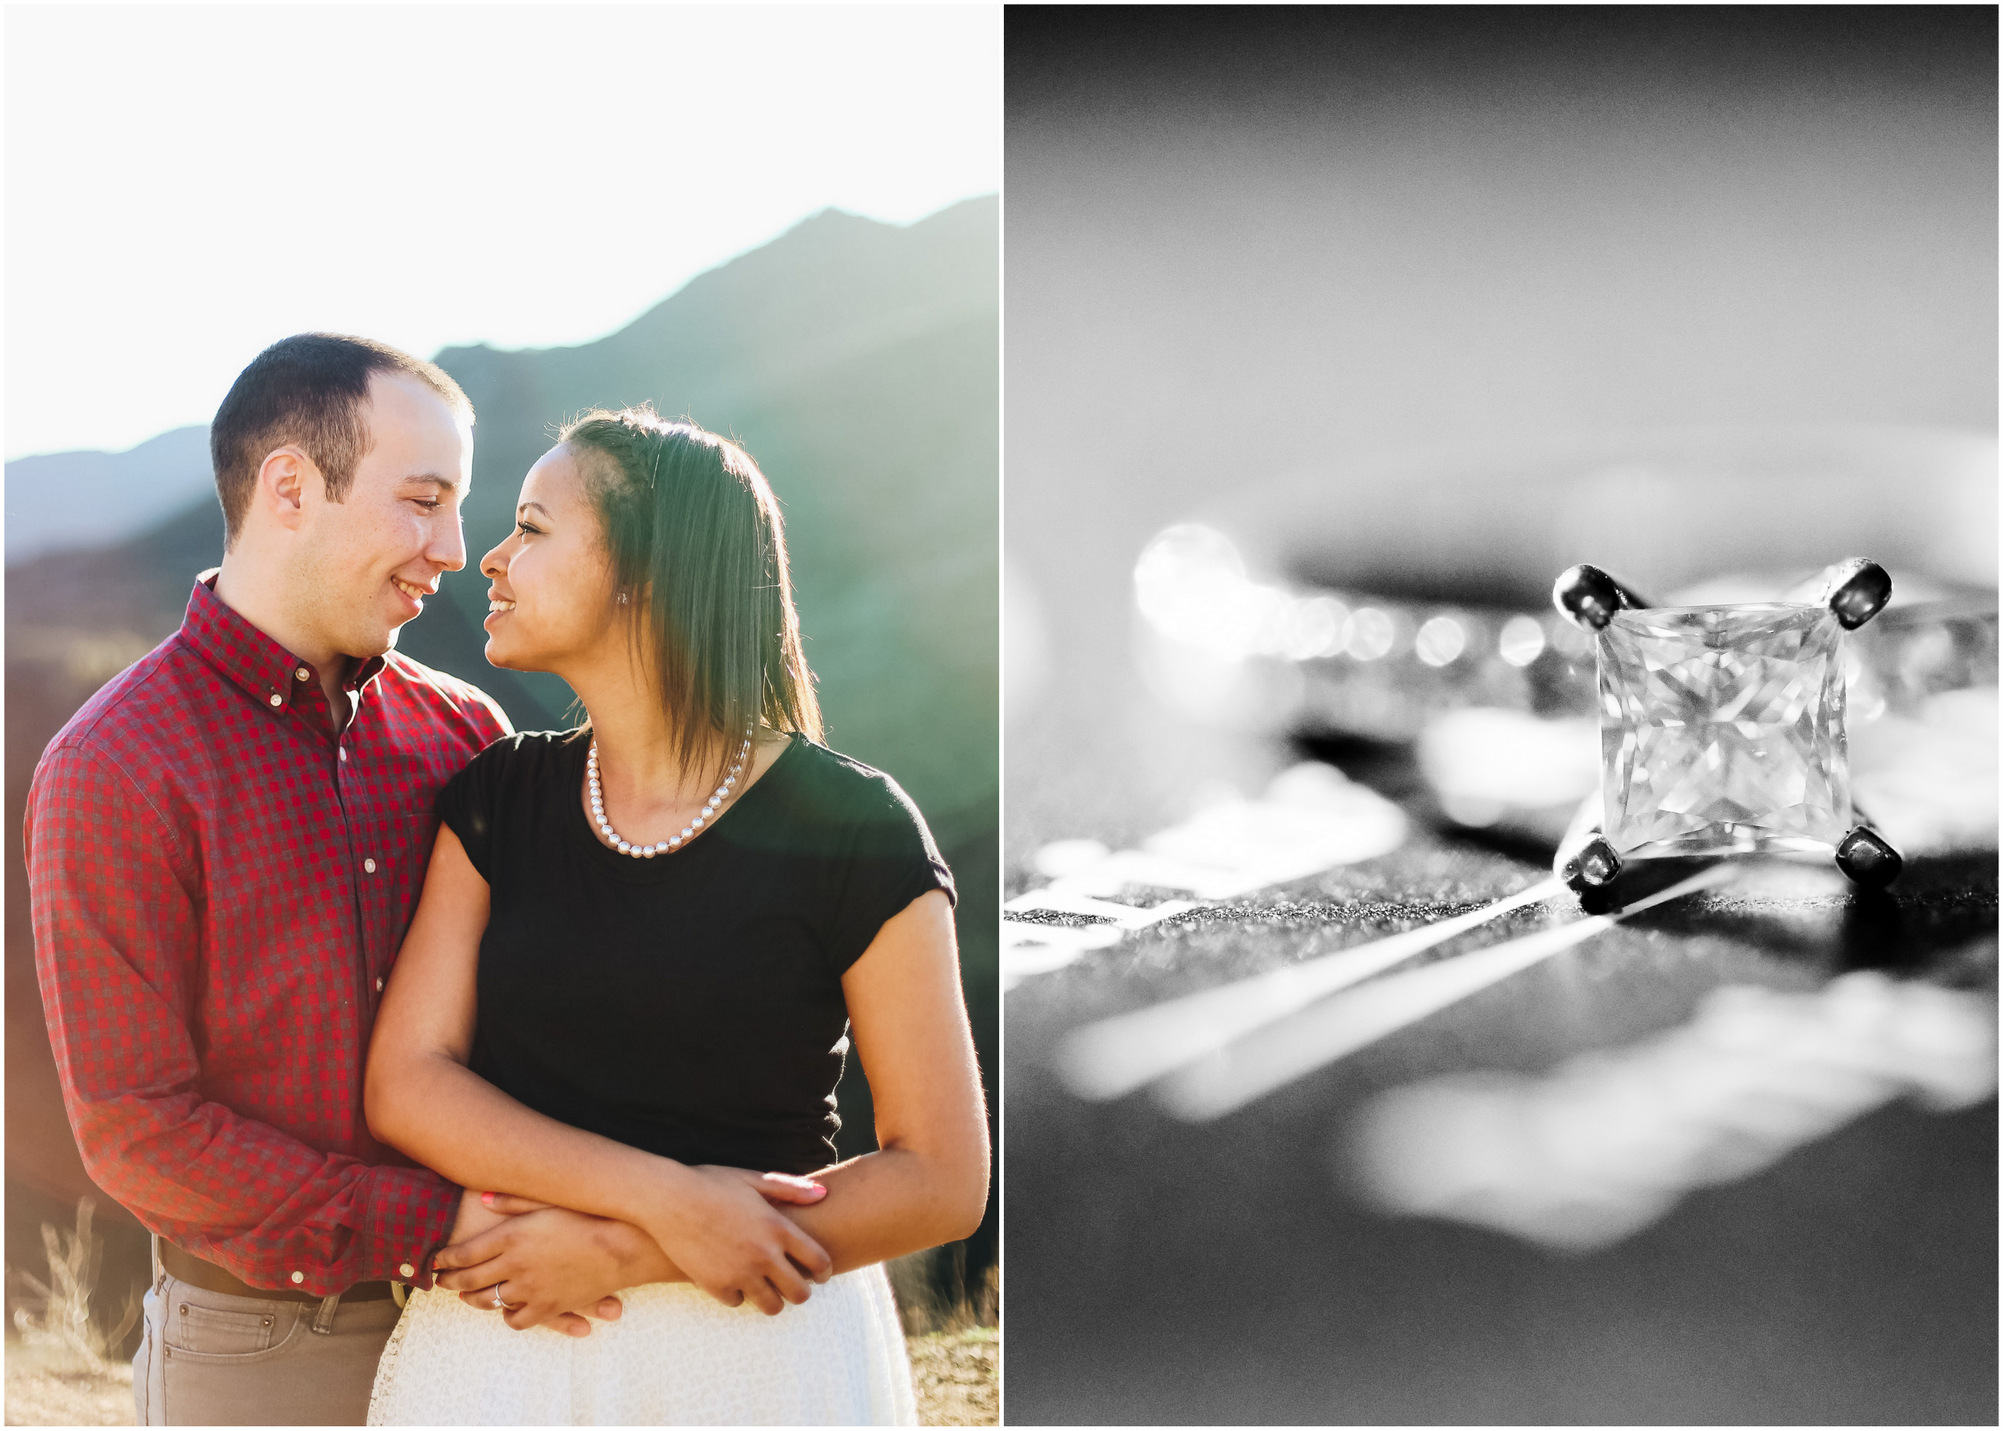 engagement photos (custom designed diamond ring!)